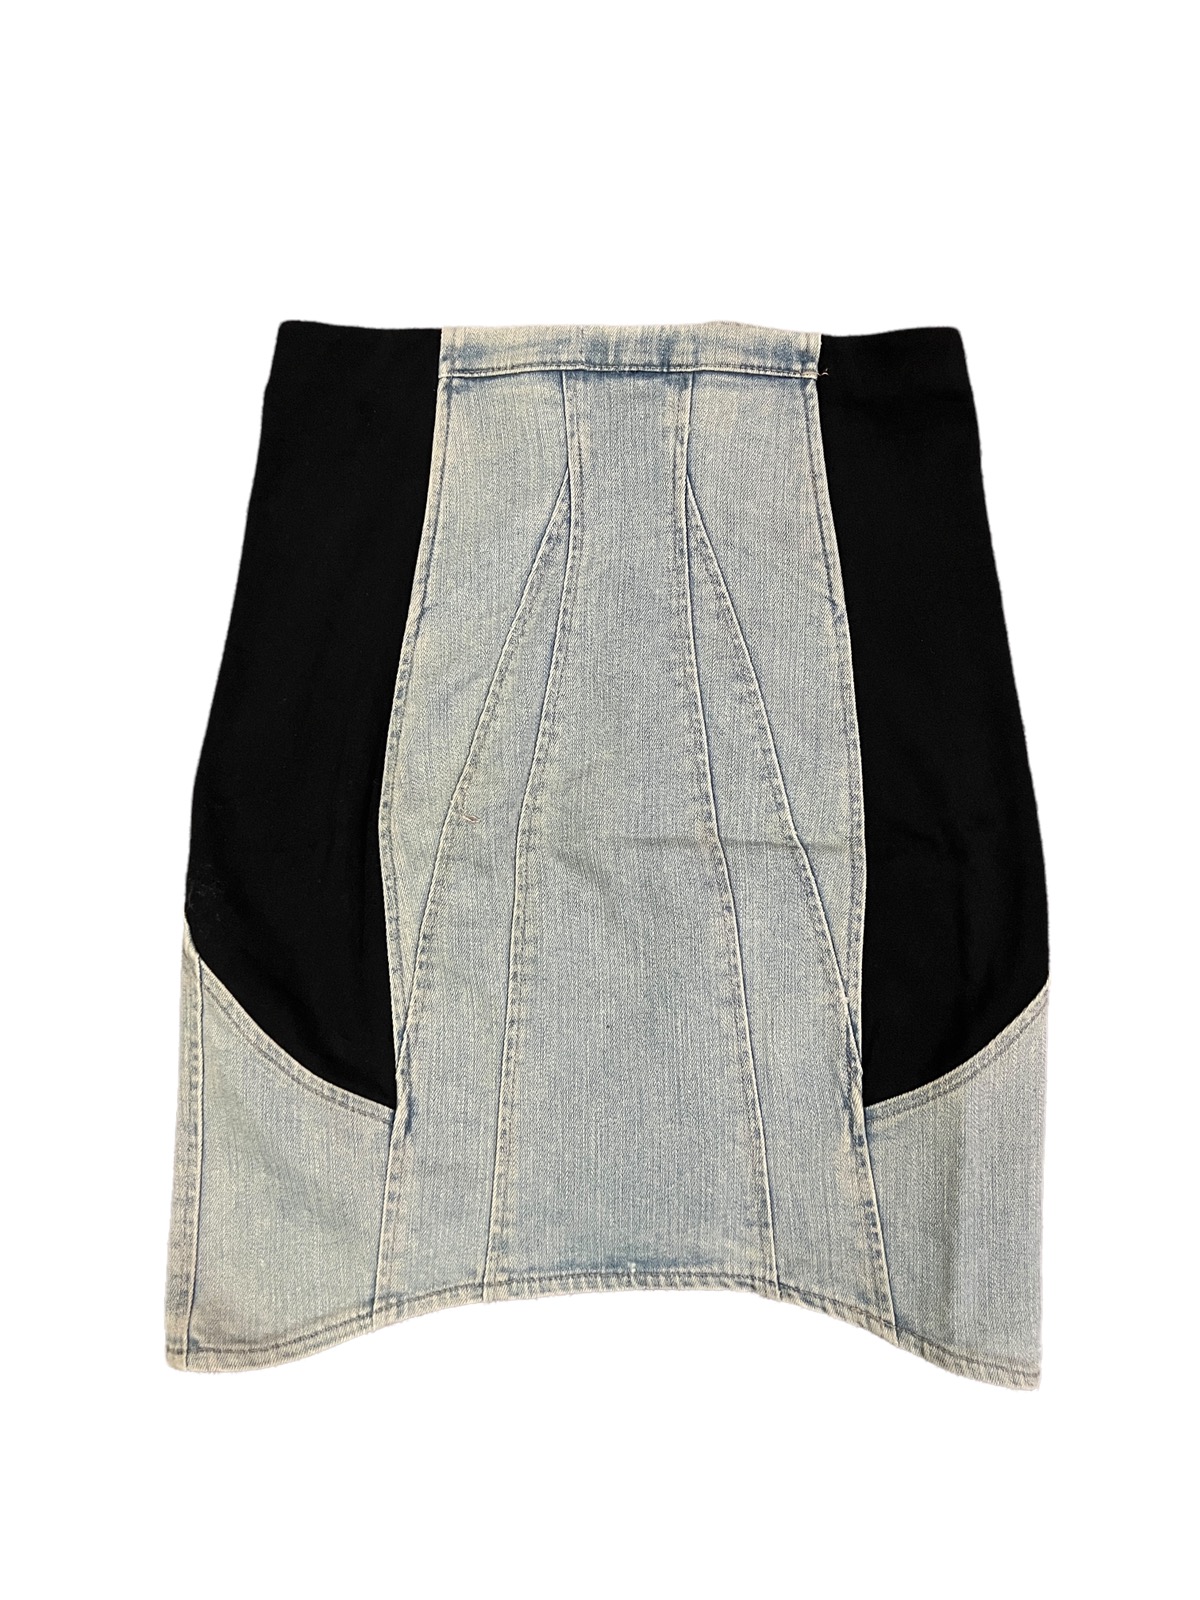 Vintage Helmut Lang Black/Distressed Jeans Mini Skirt - 2